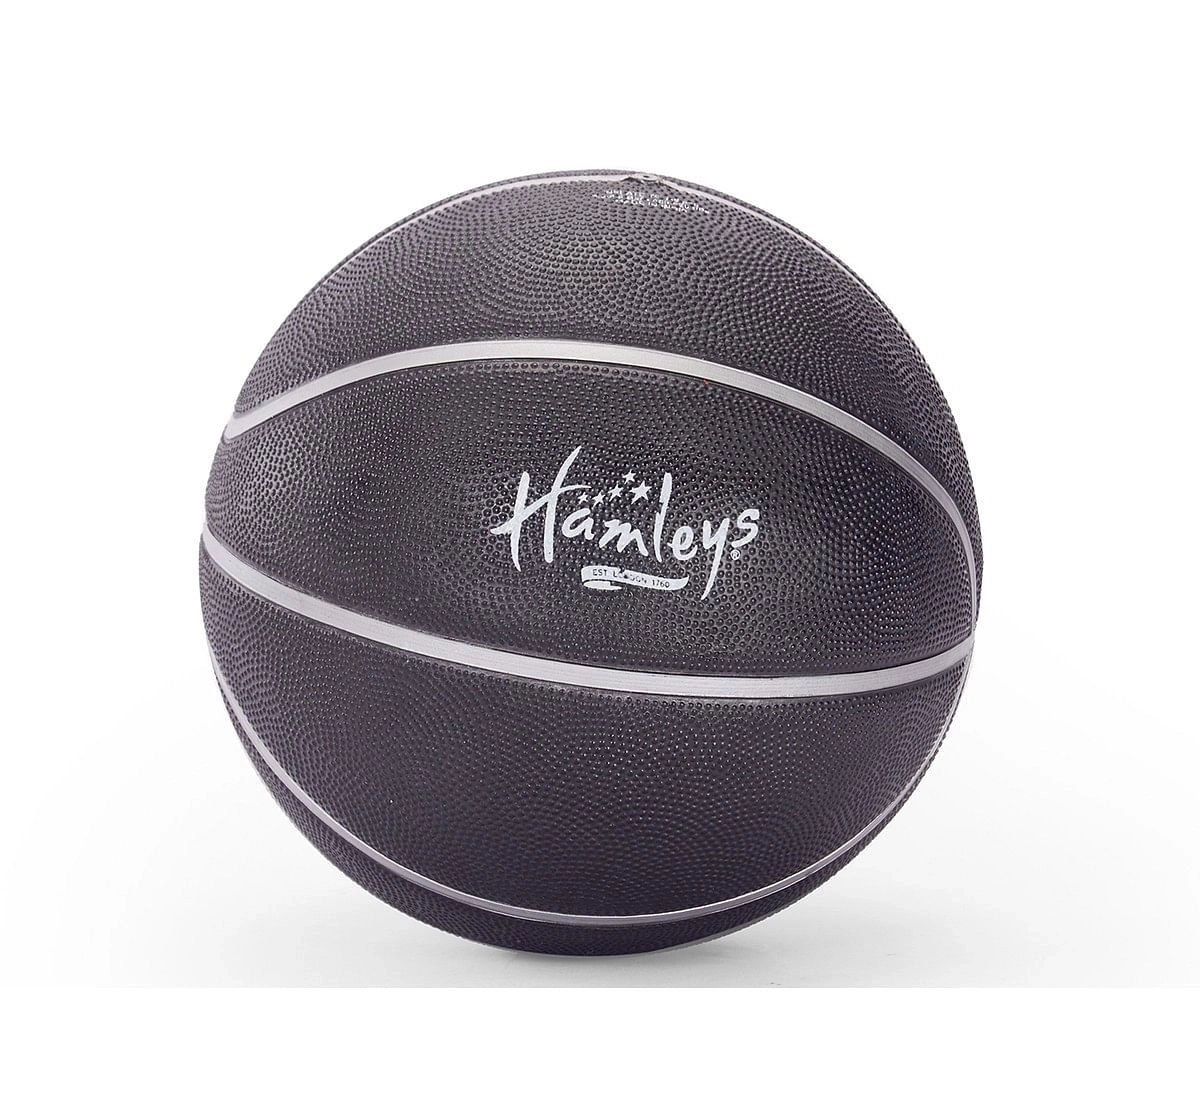 Hamleys Star Basketball for Kids age 3Y+ (Black)